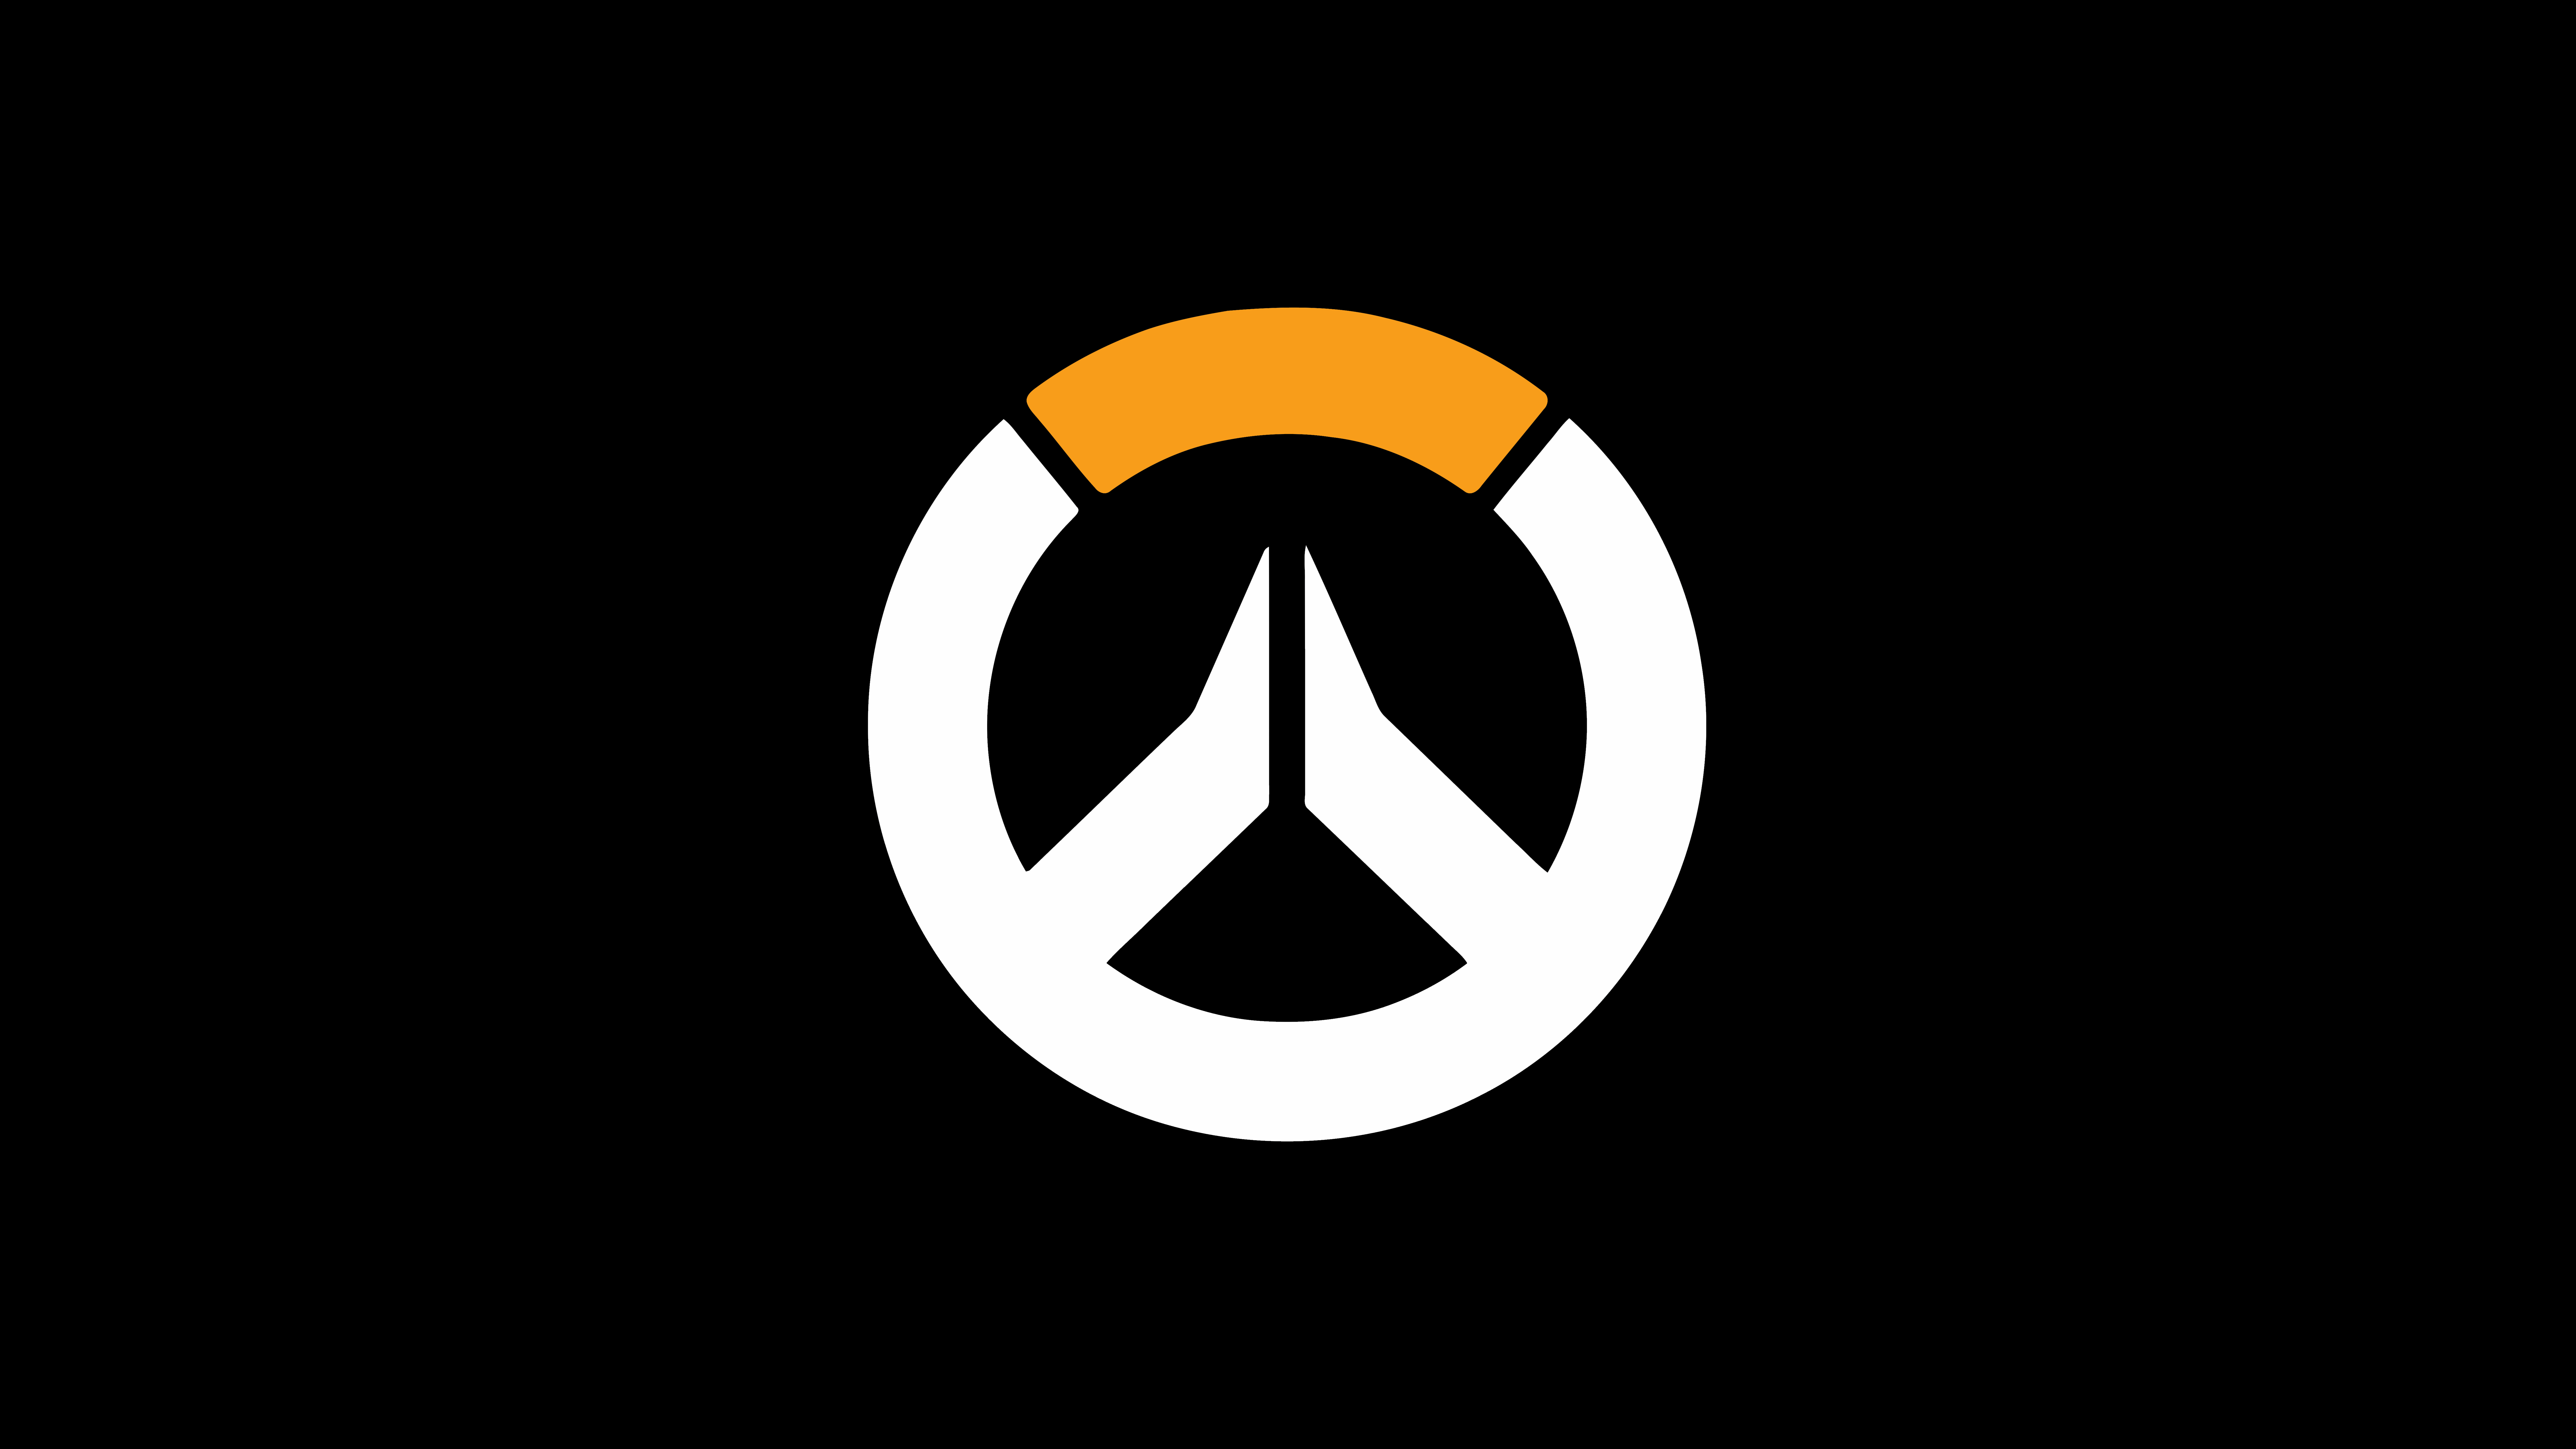 General 10000x5625 Overwatch logo minimalism PC gaming simple background